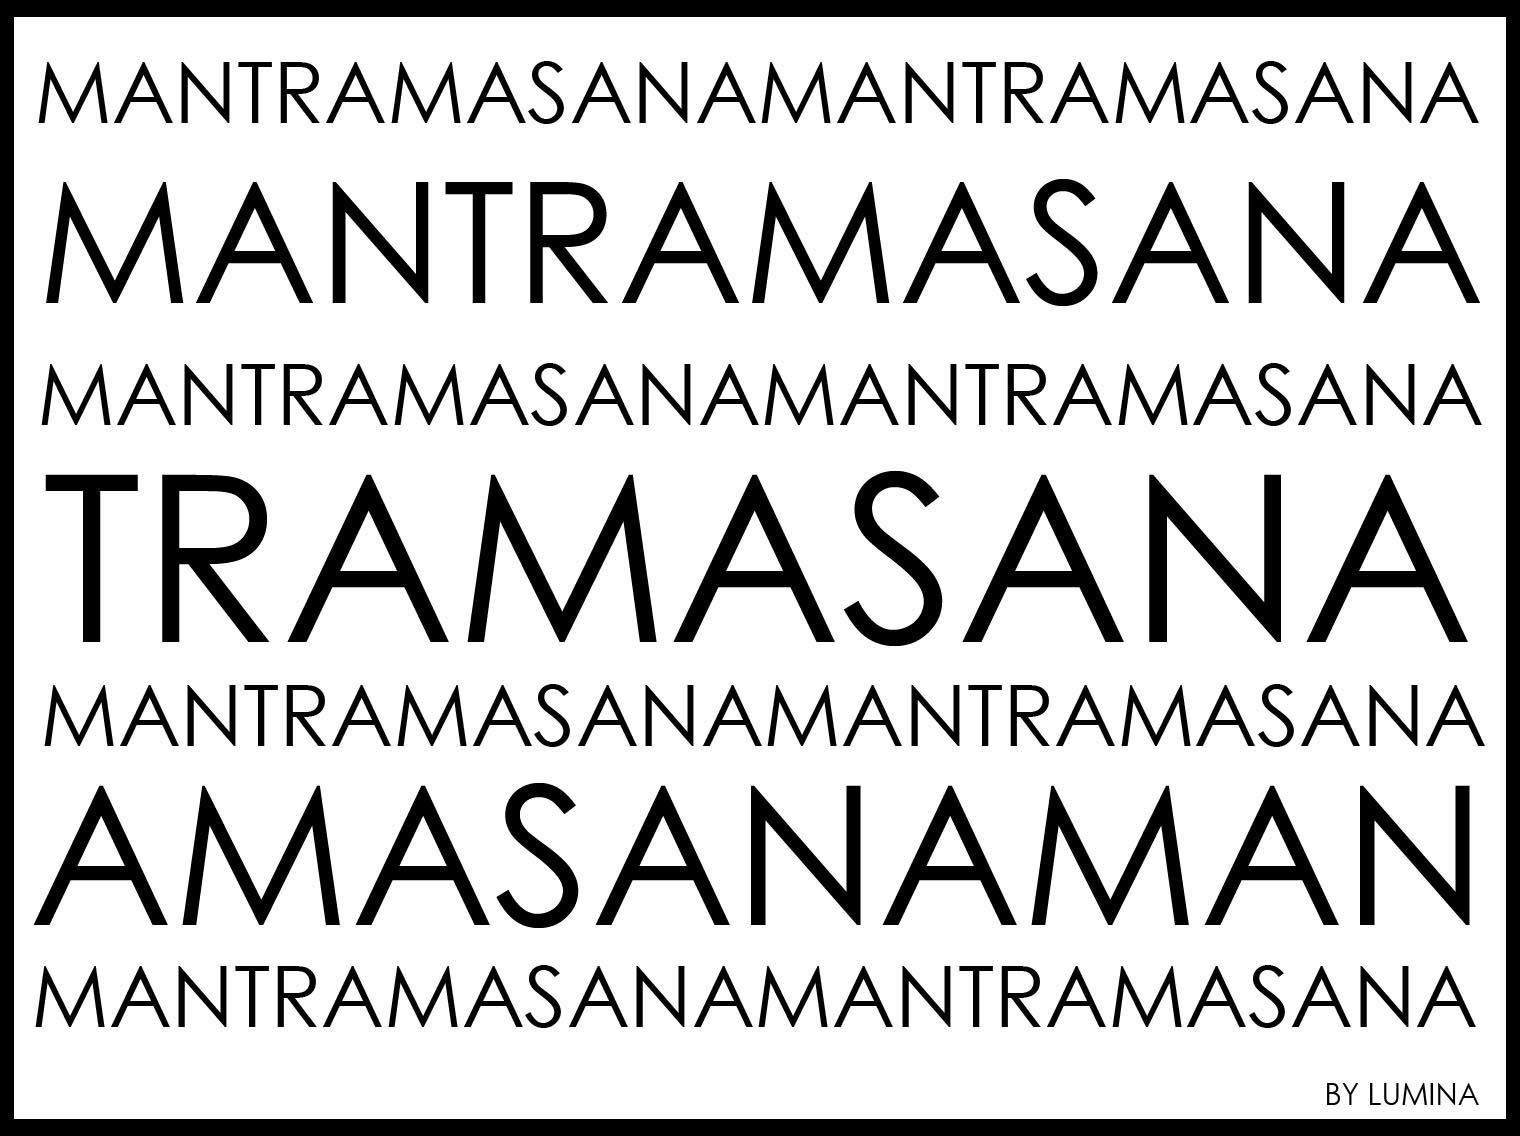 [MANTRAM+ASANA.jpg]